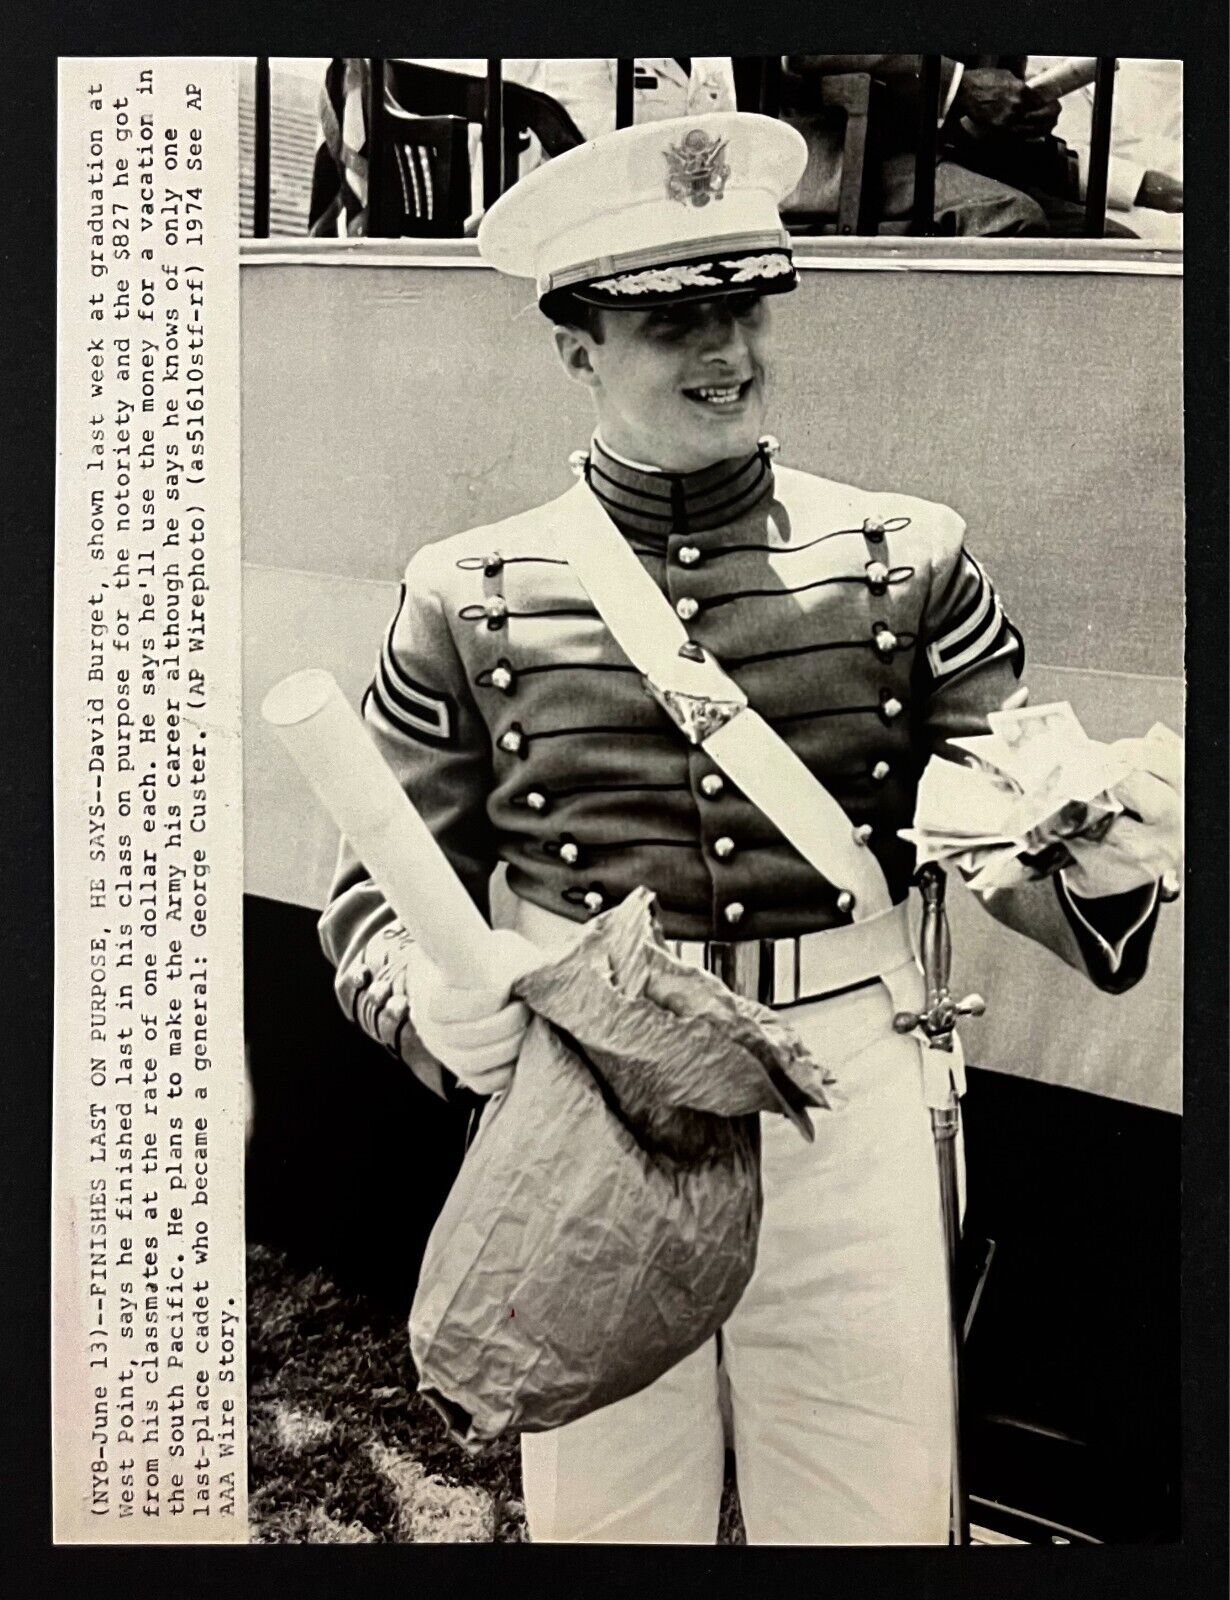 1974 West Point Graduation Last Place Cadet Gets Vacation Money VTG Press Photo